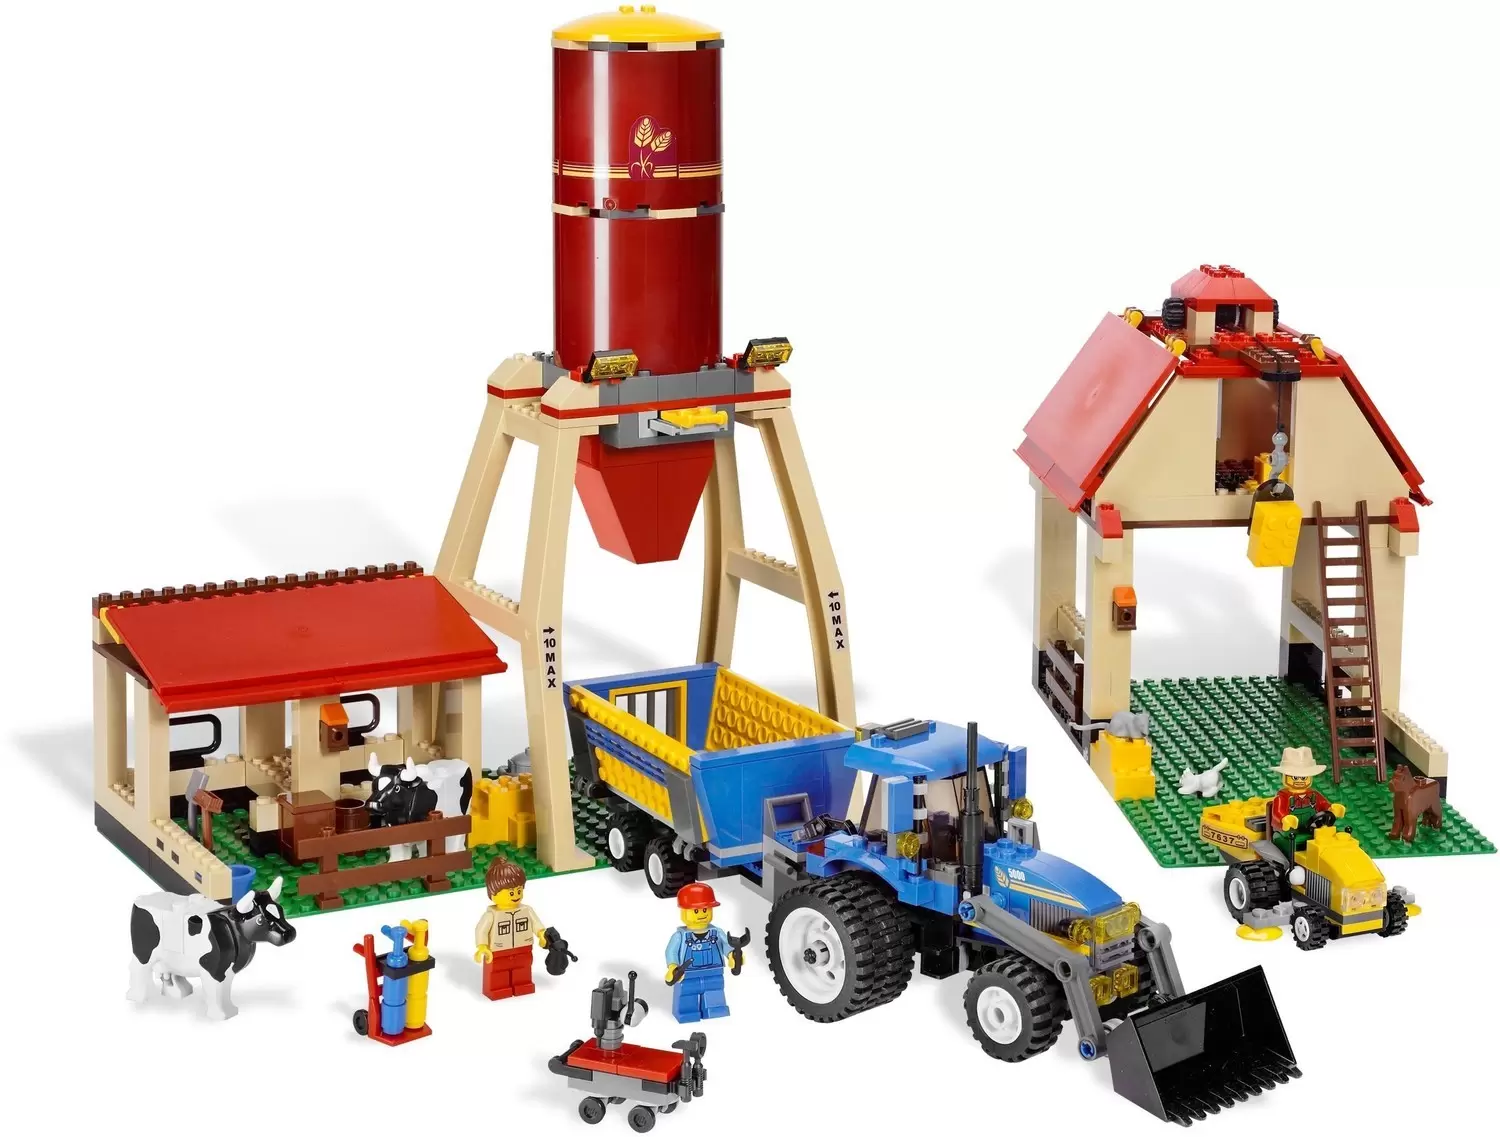 attribut Downtown vejspærring Farm - LEGO CITY set 7637